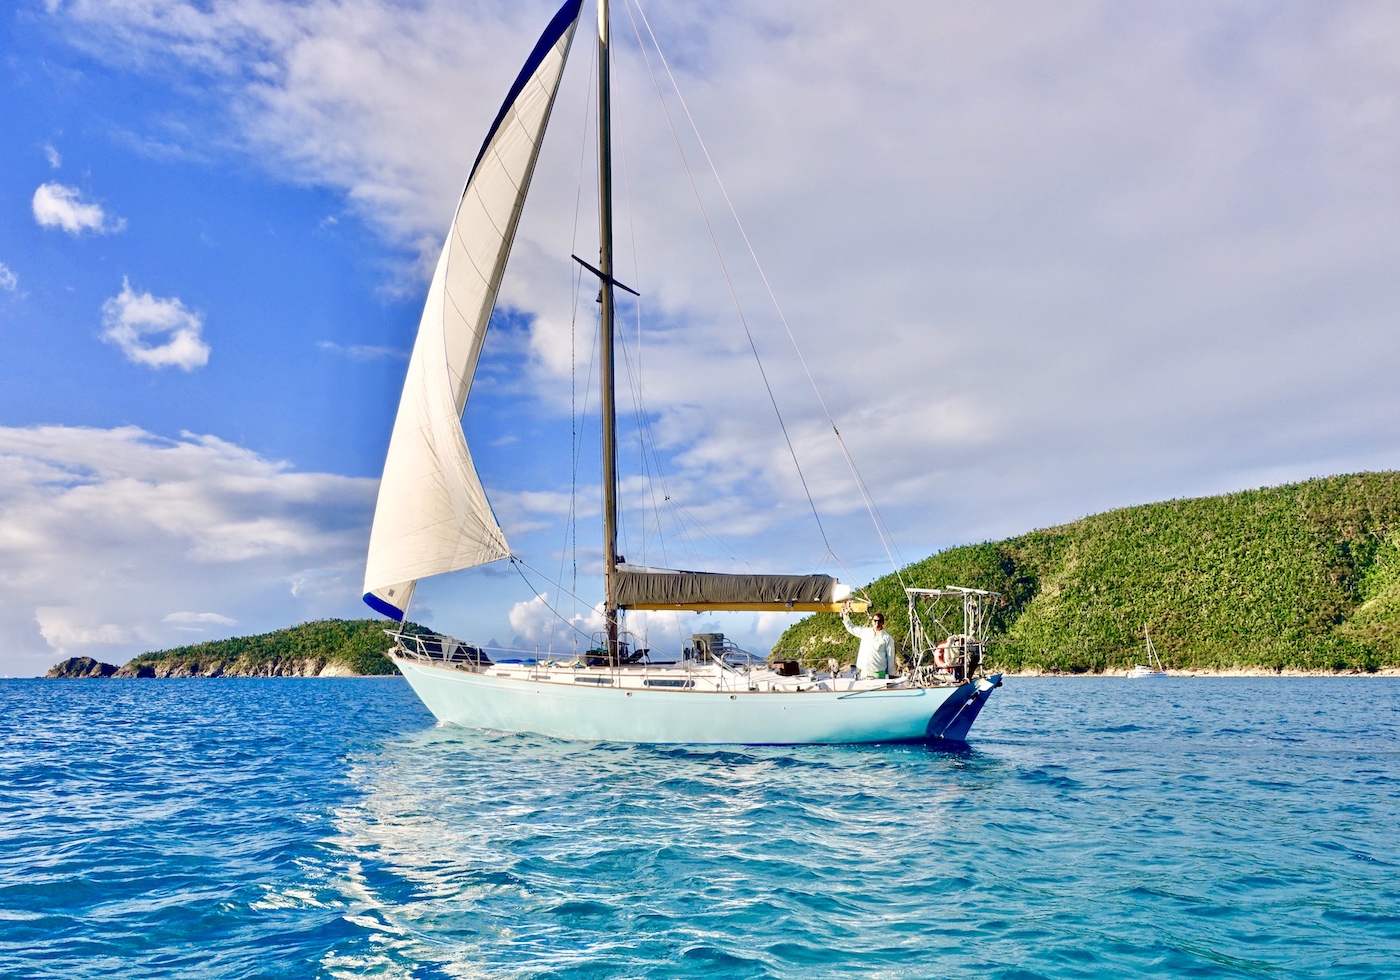 us virgin island sailboat charter